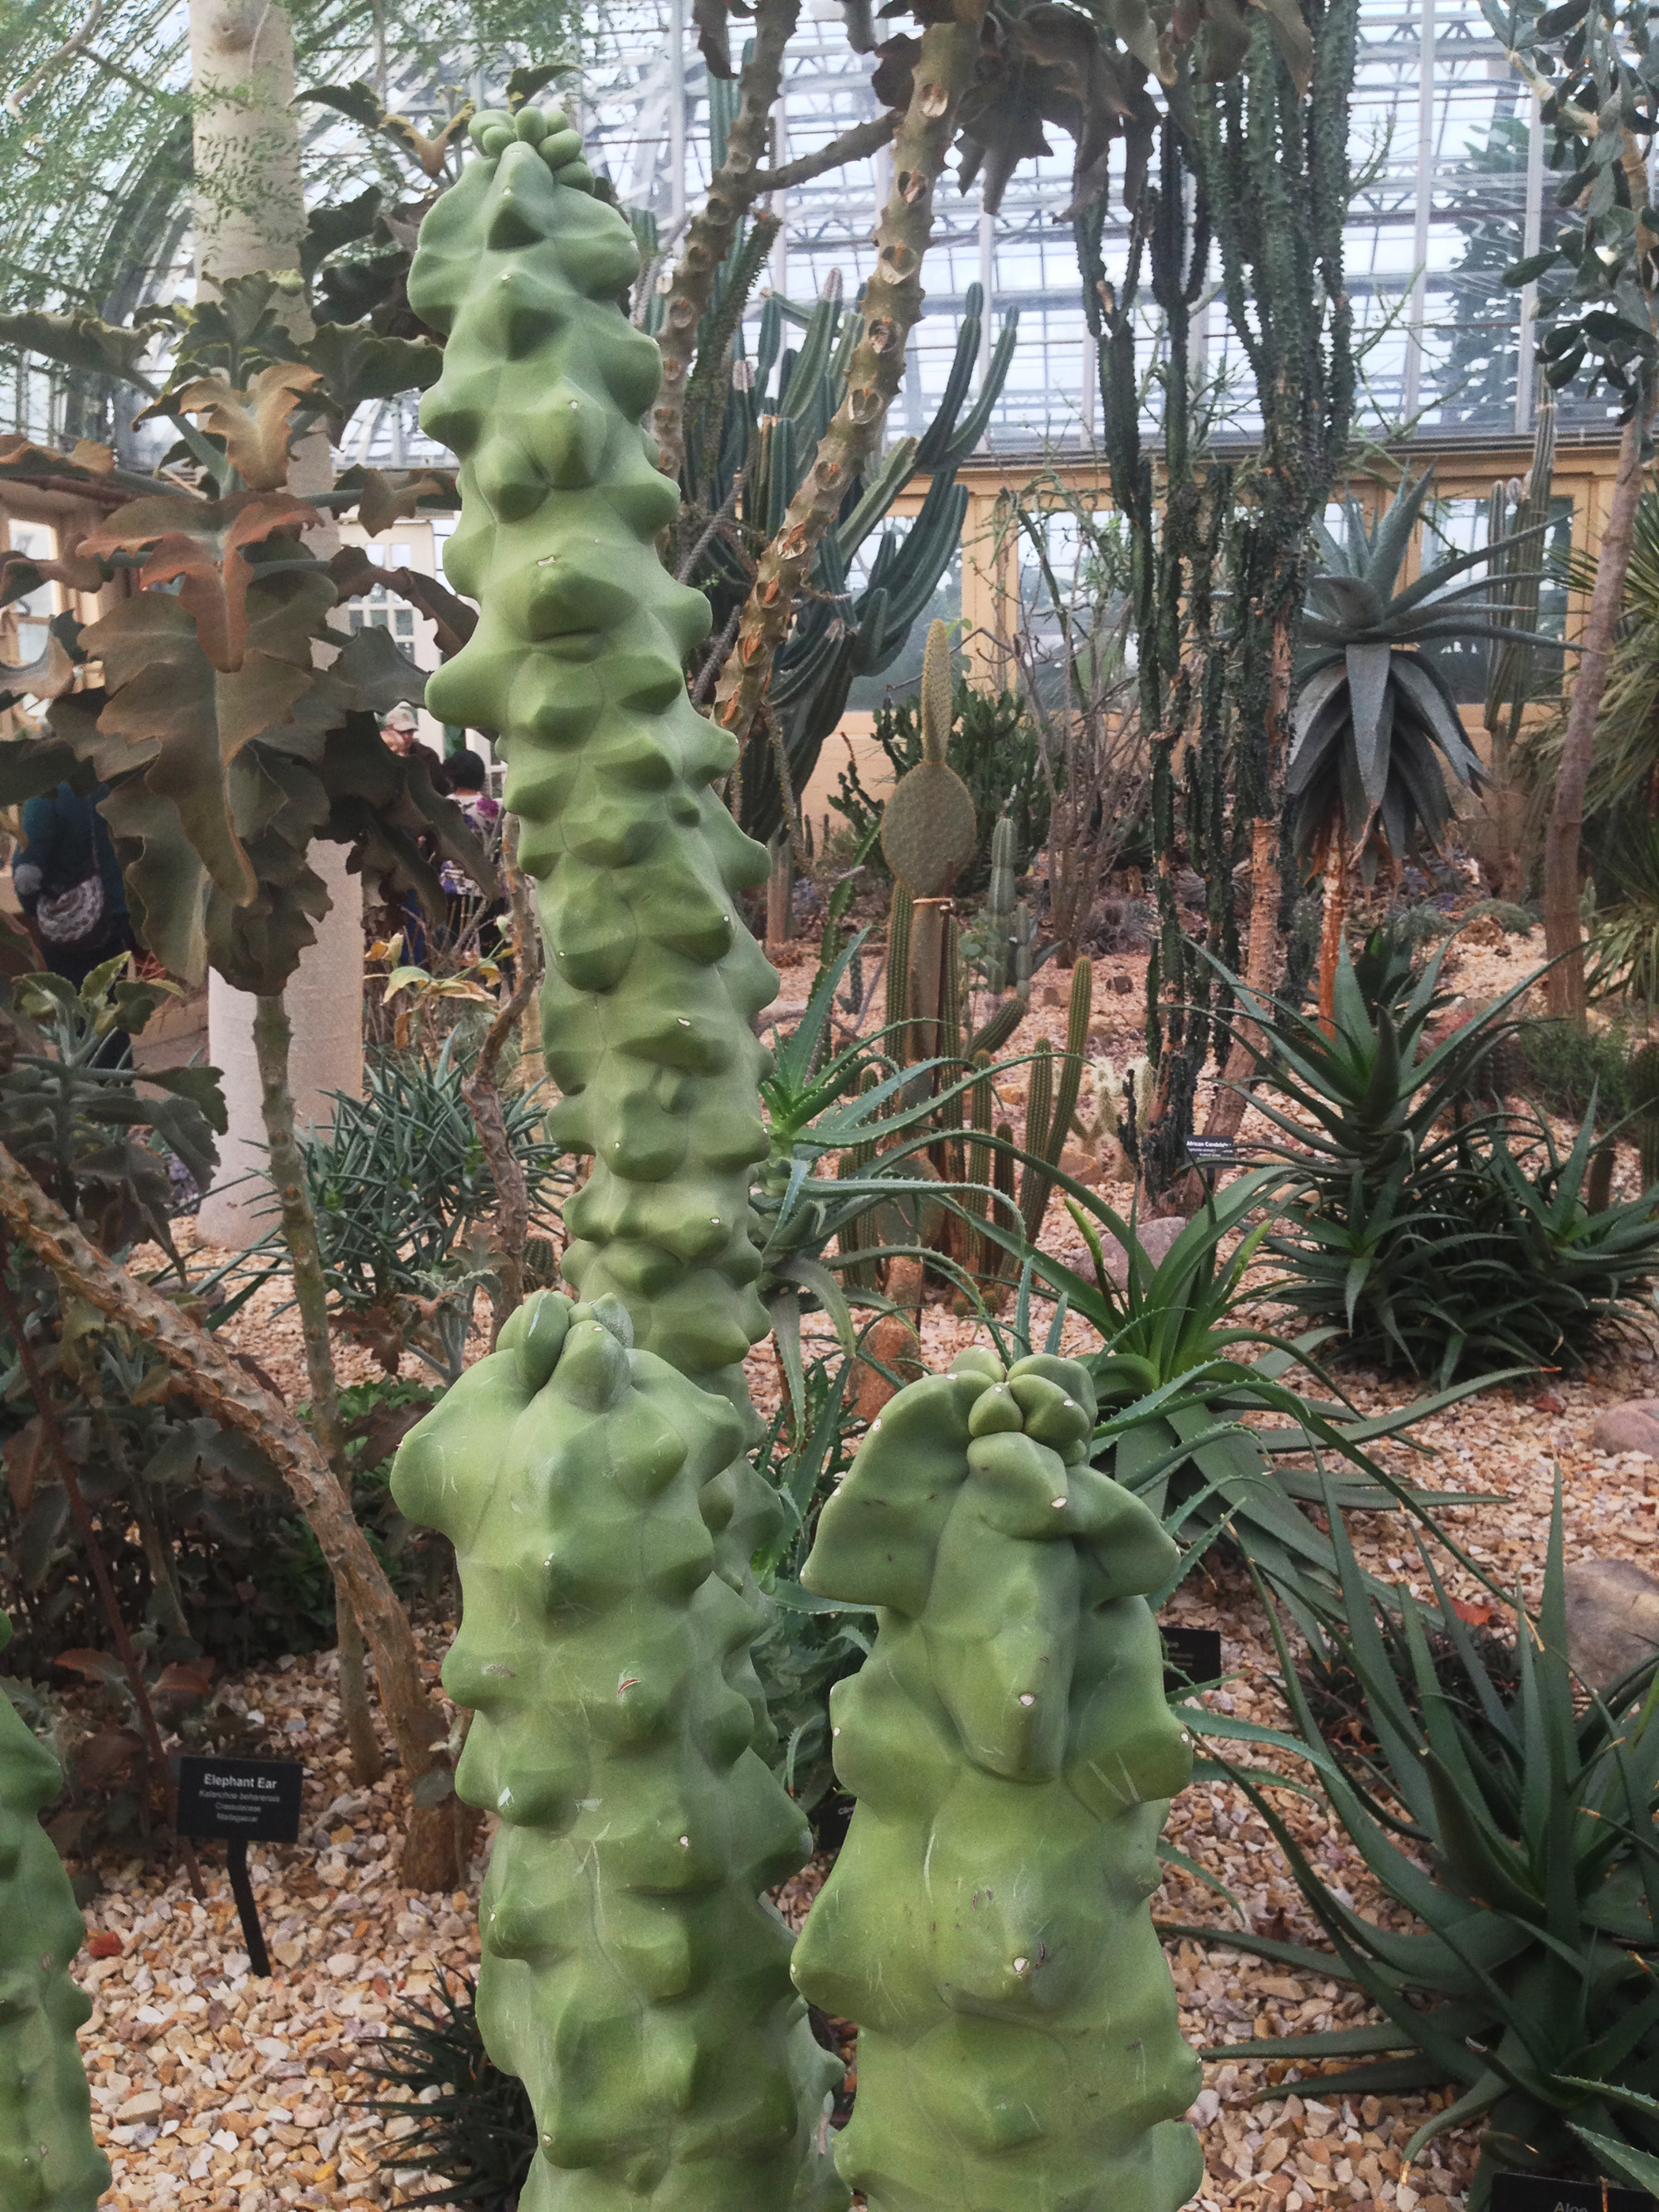 Totem pole cactus (Pachycereus schotti var. monstrosa), Desert Room, Garfield Park Conservatory, Chicago Illinois